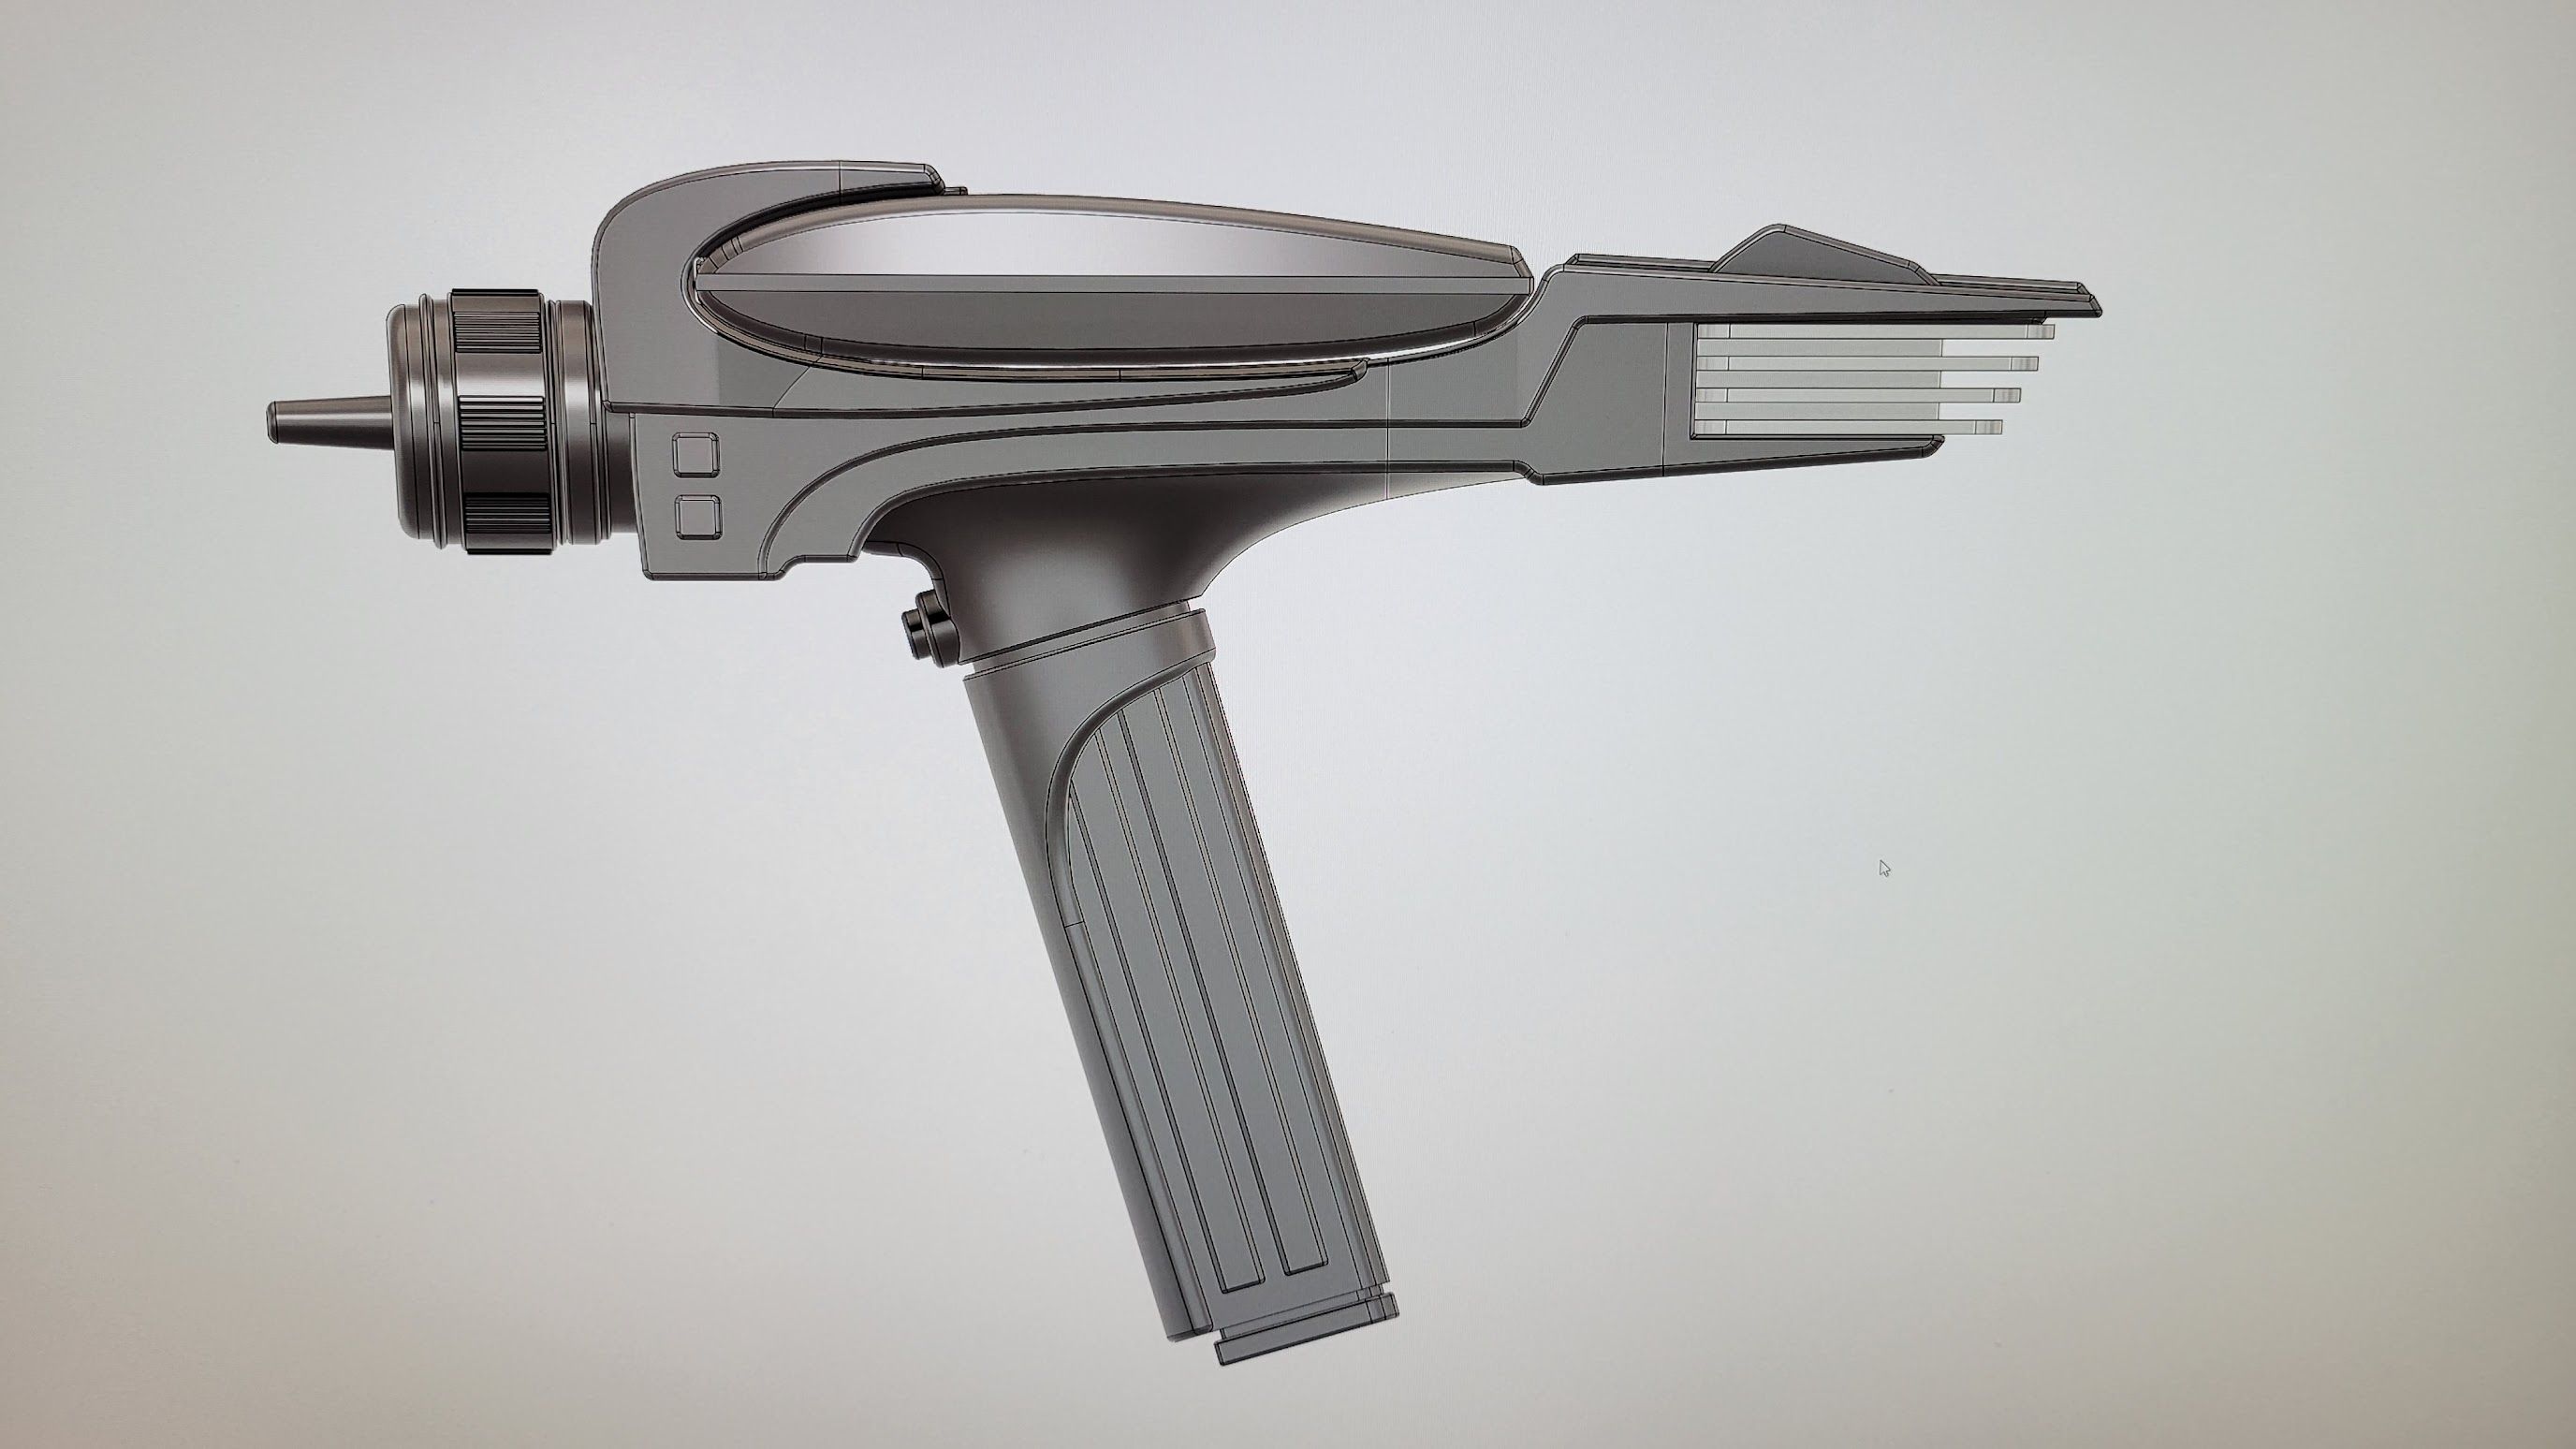 20210917_114011.jpg Download STL file Star Trek Mk2 Phaser - Star Trek Continues • 3D printing design, FreeBug